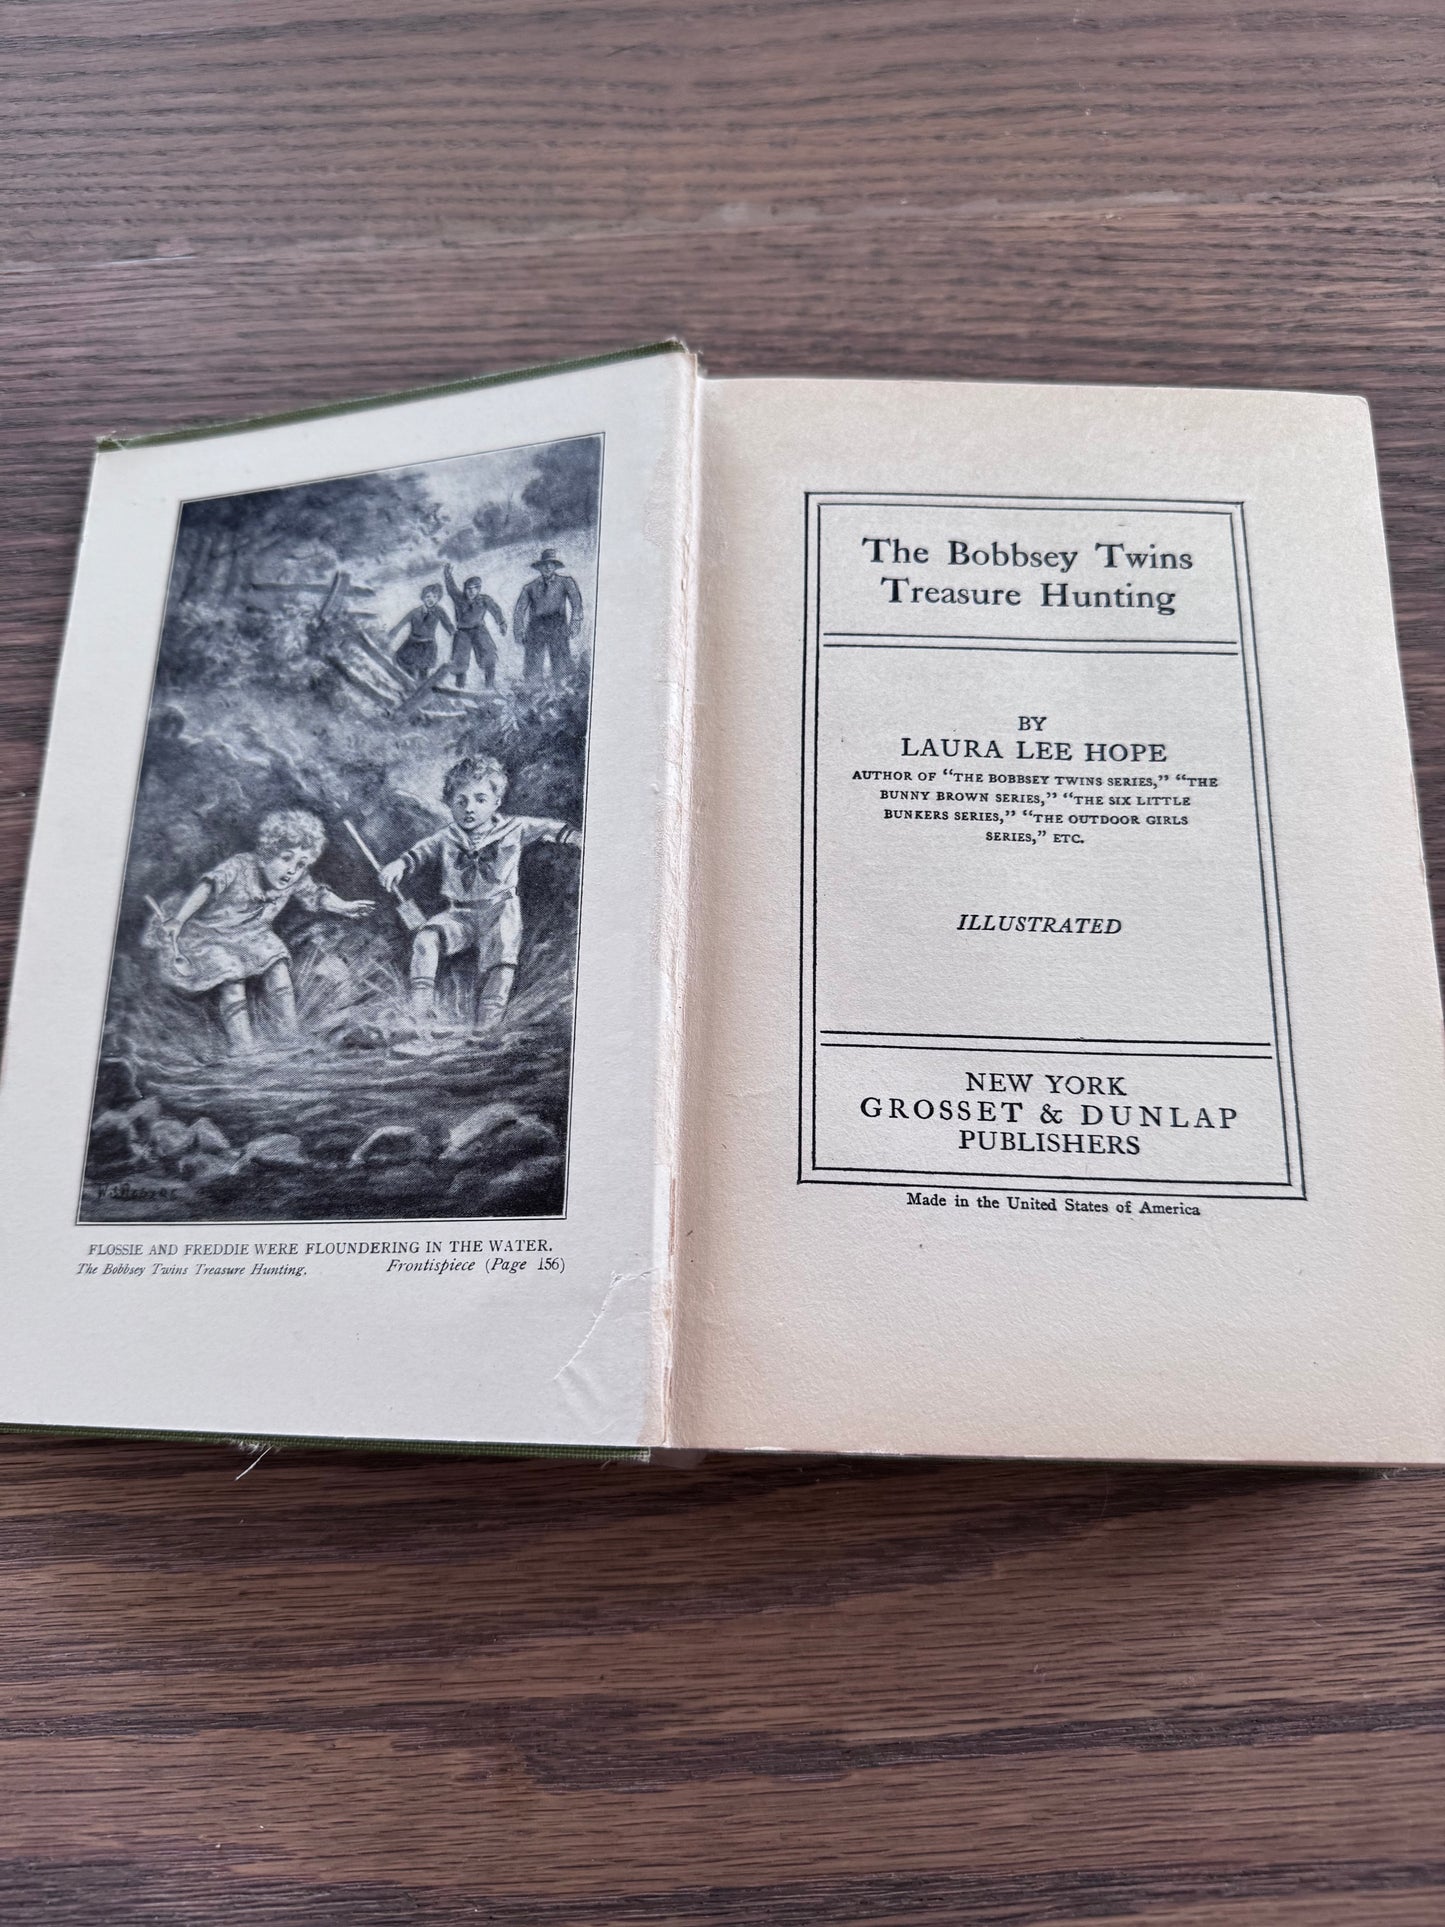 The Bobby Twins Treasure Hunting (1929)